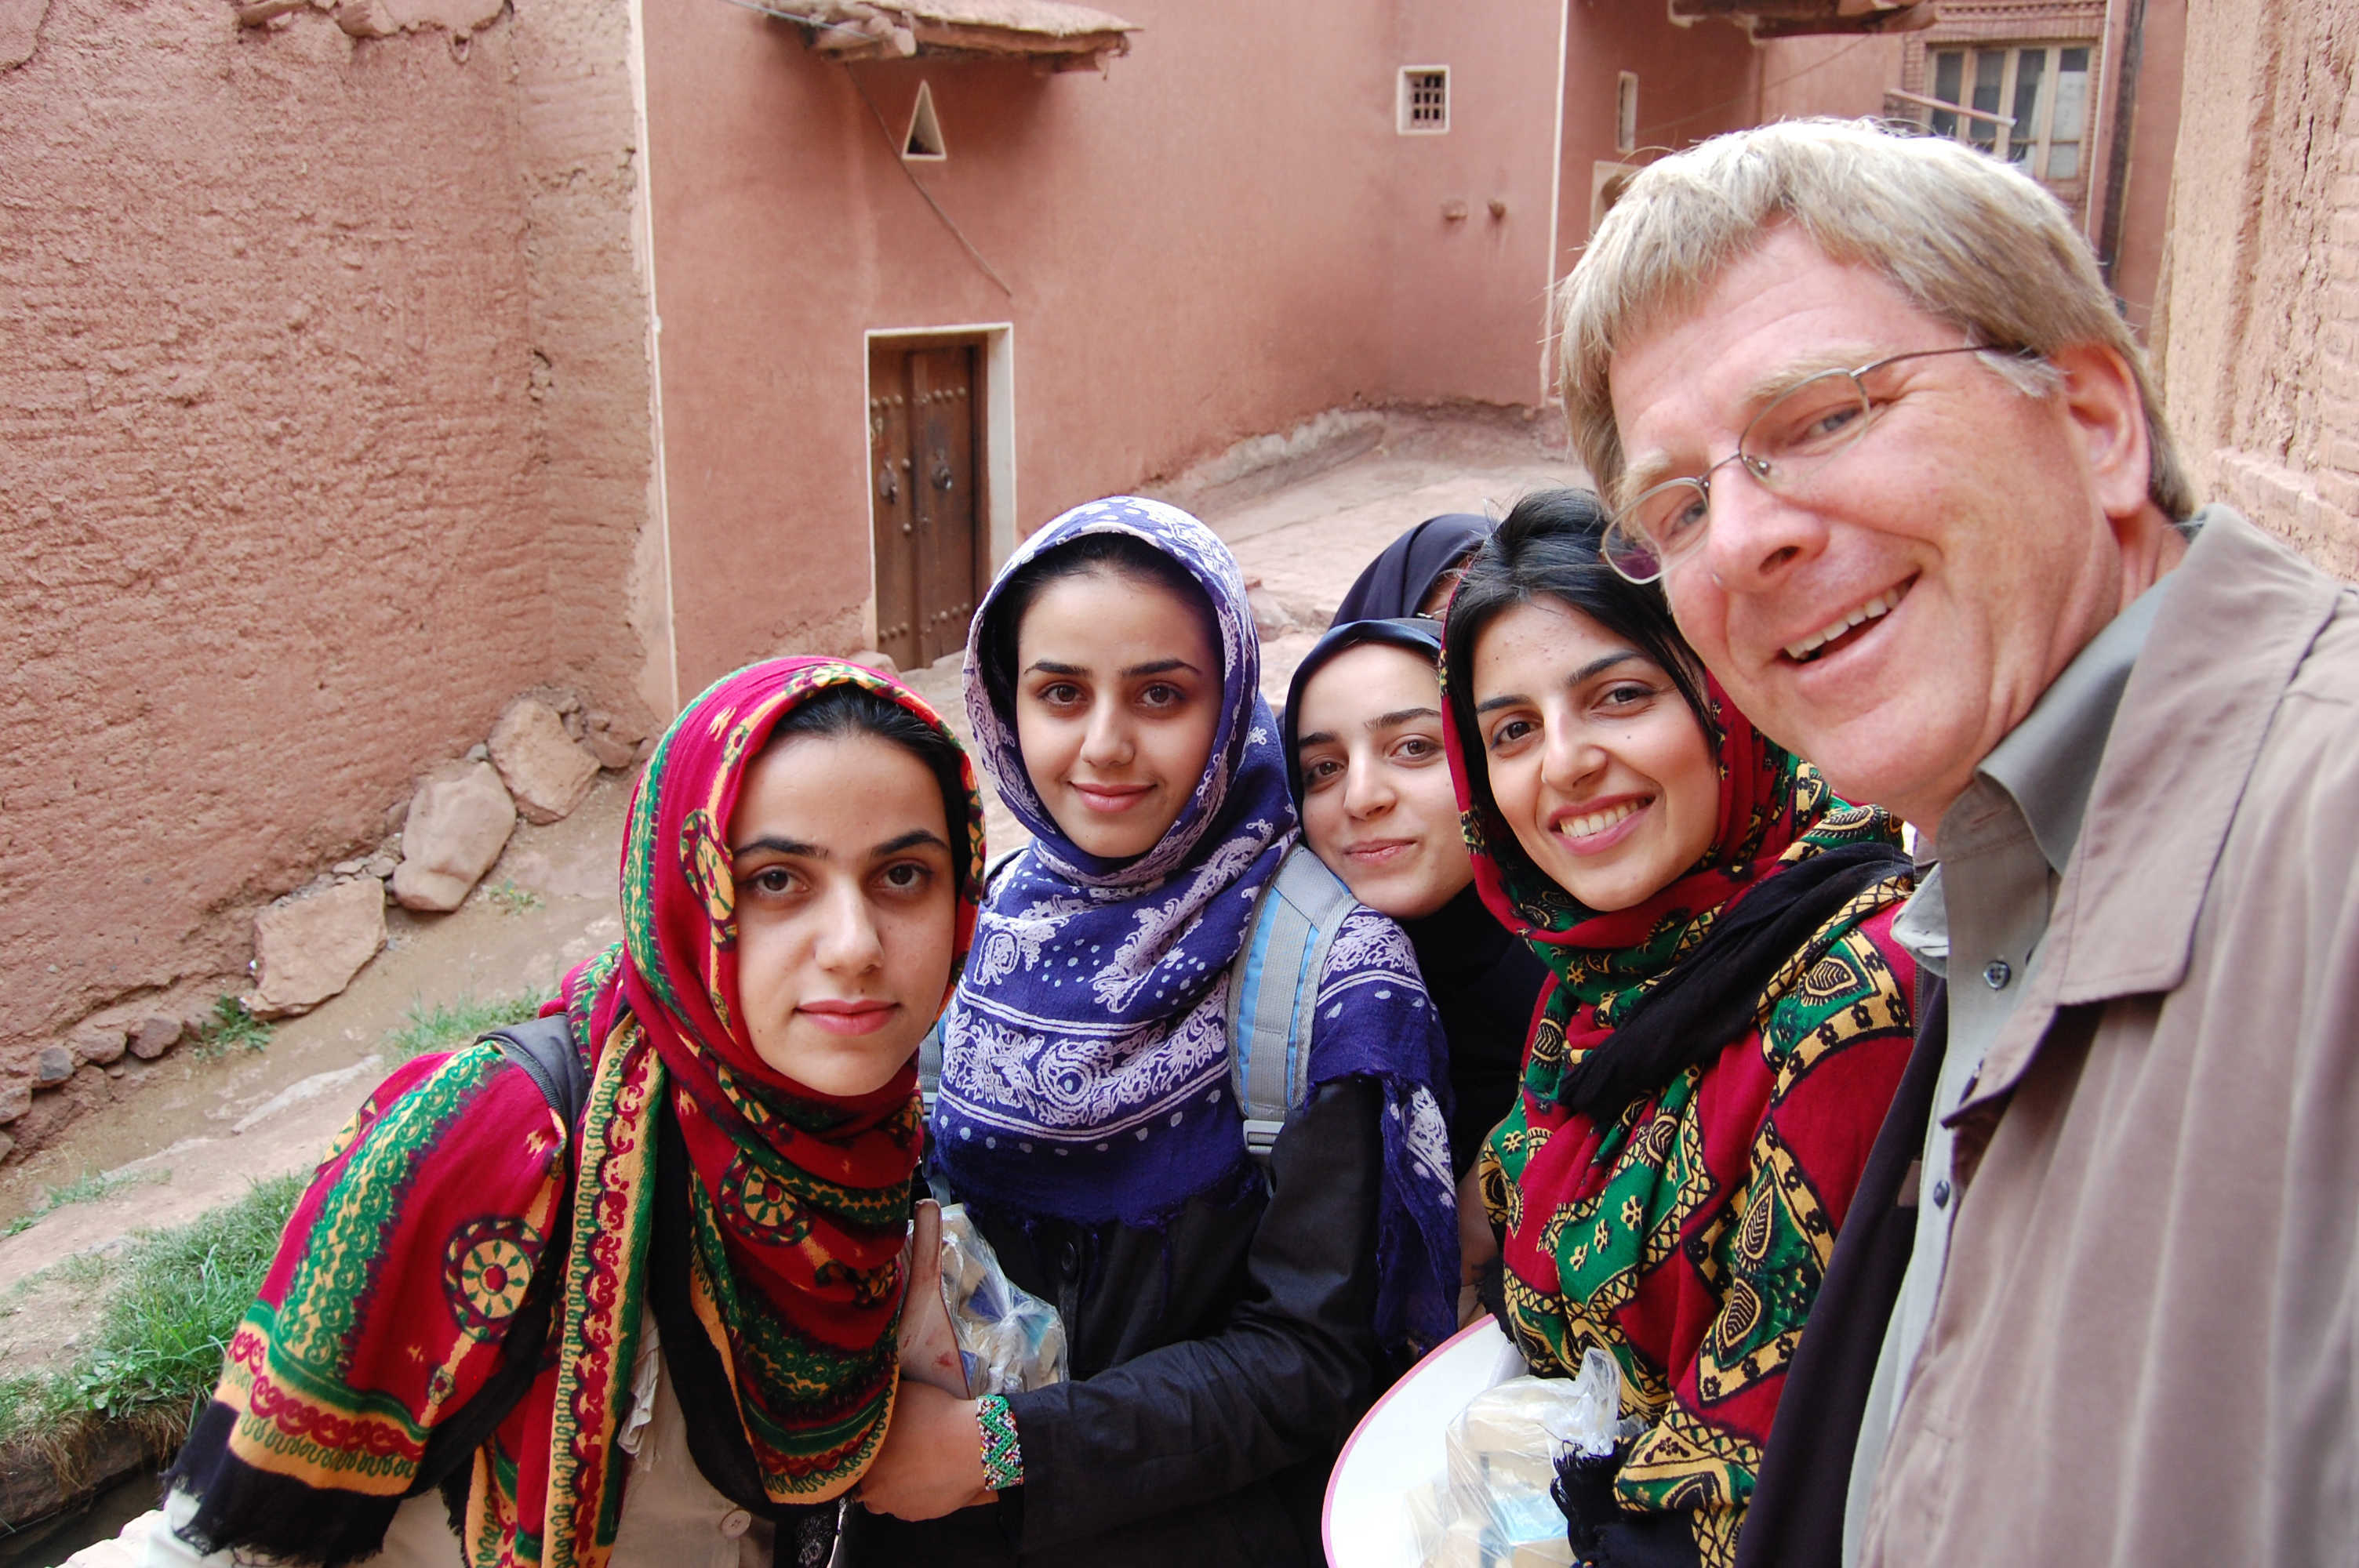 Village girls pose with Rick Steves in Iran